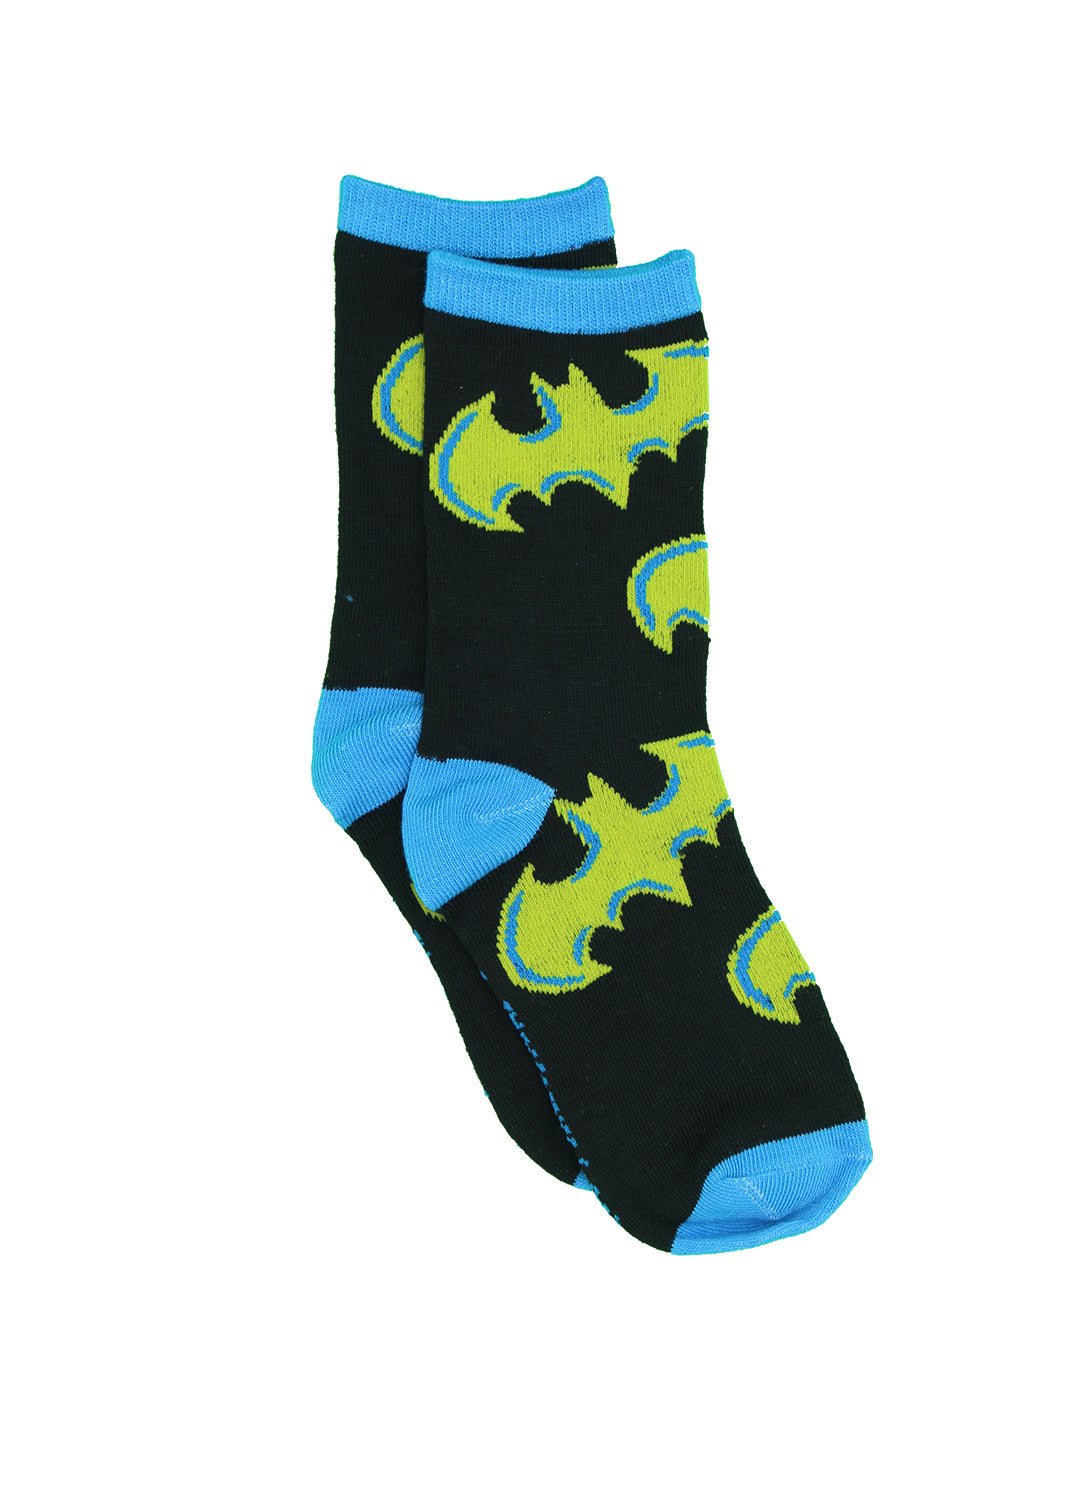 Boys Batman Socks - 6 Pack